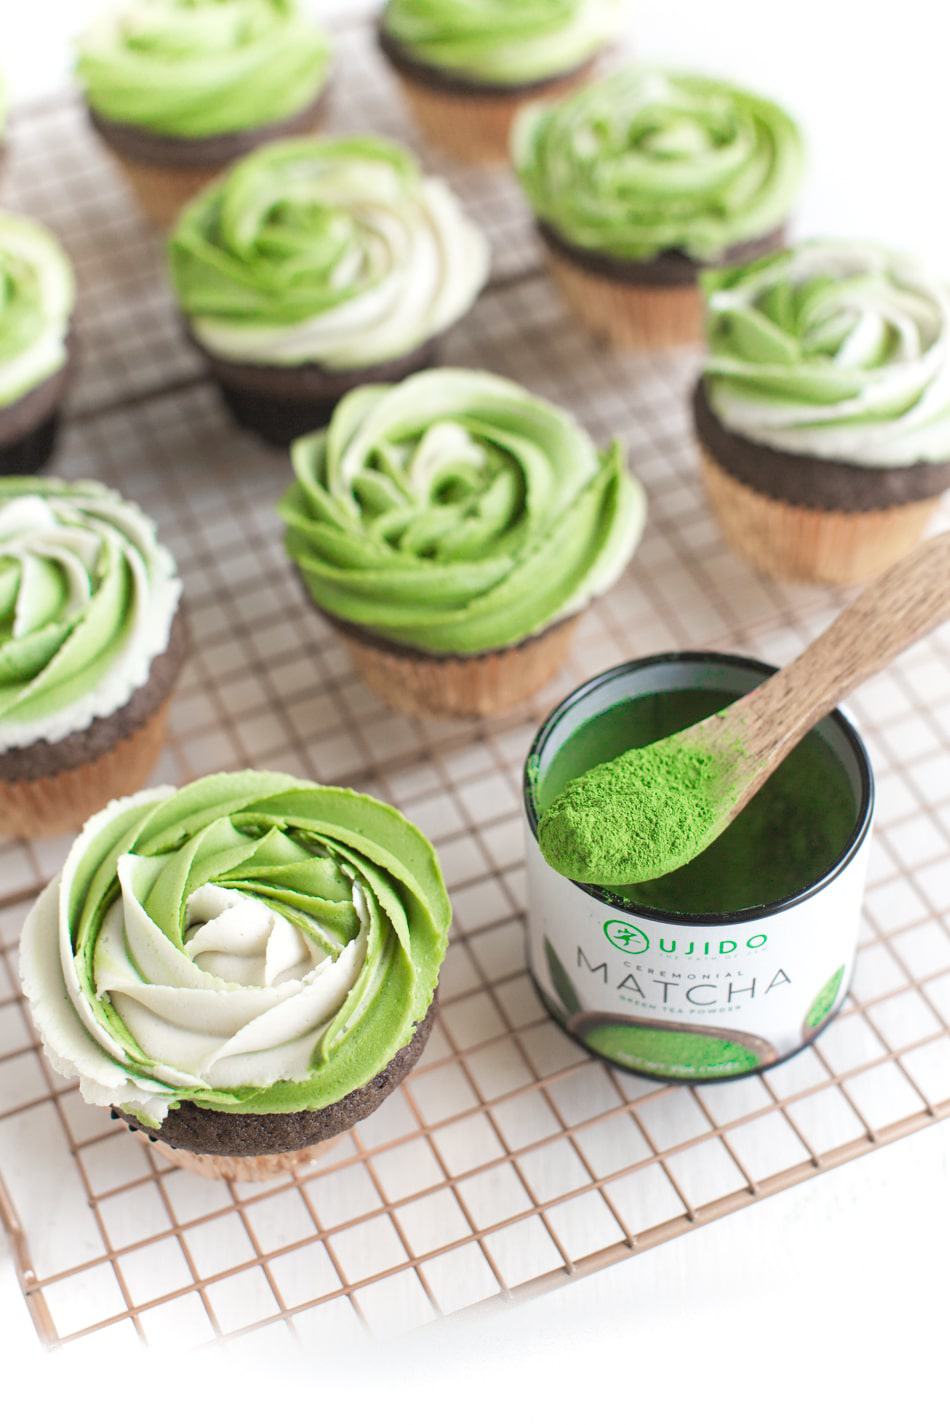 Vegan Matcha Cupcakes | WorldofVegan.com | #vegan #cupcakes #matcha #dessert #worldofvegan #dairyfree